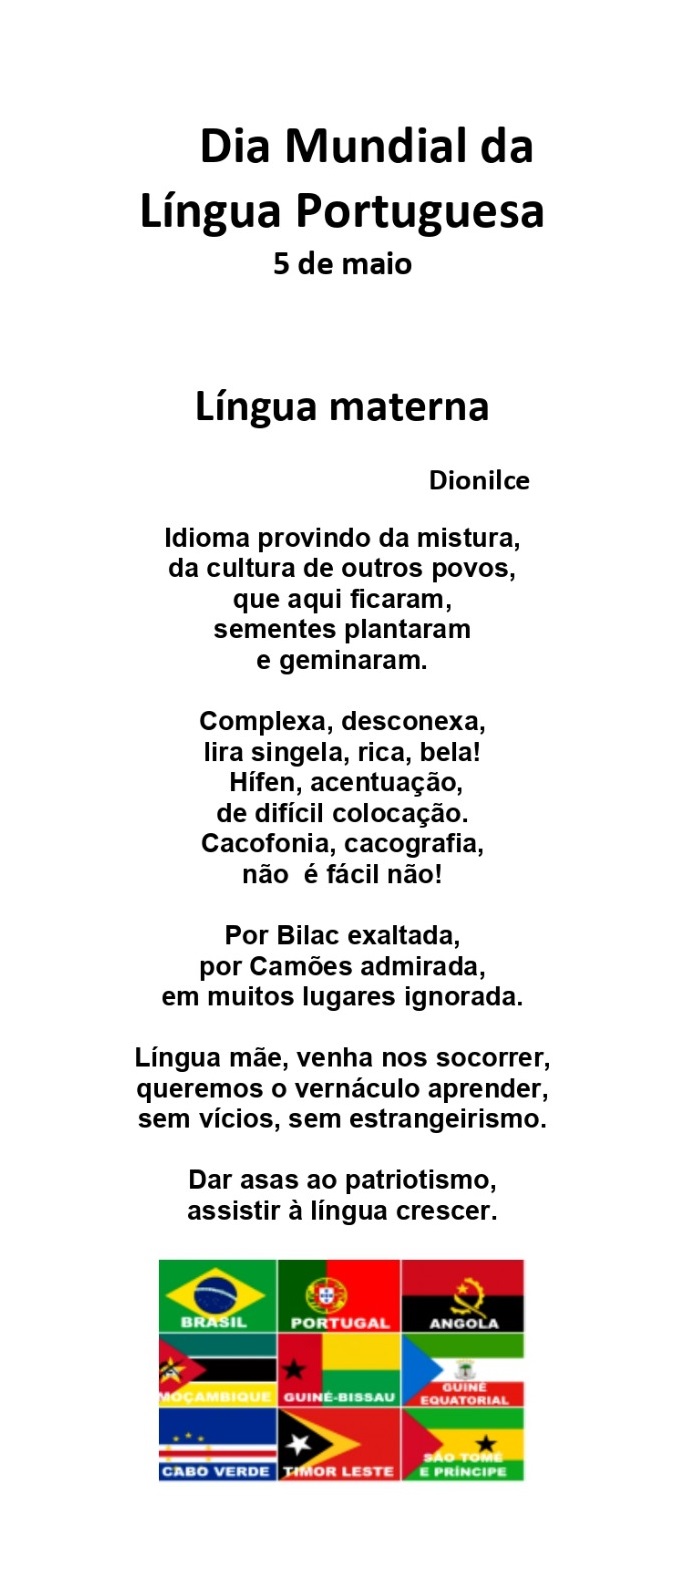 5 de maio - Dia Mundial da Língua Portuguesa